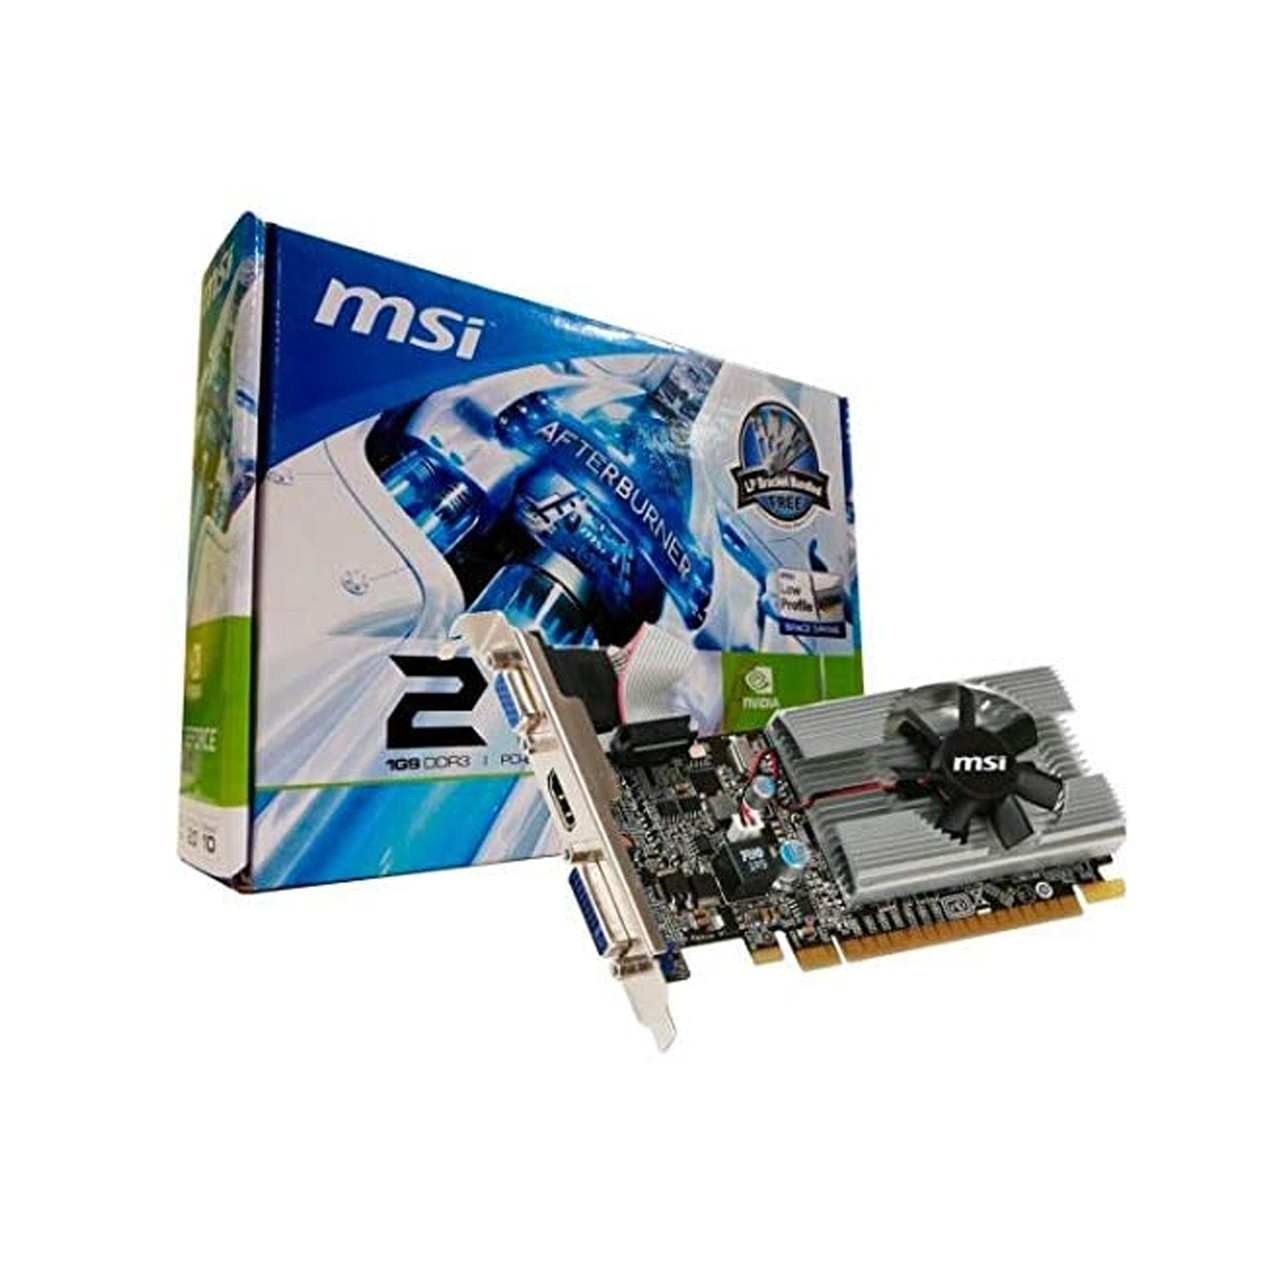 MSI GeForce 210 1024 MB,1 GB DDR3 PCI-Express 2.0 Graphics Card N210-MD1G/D3